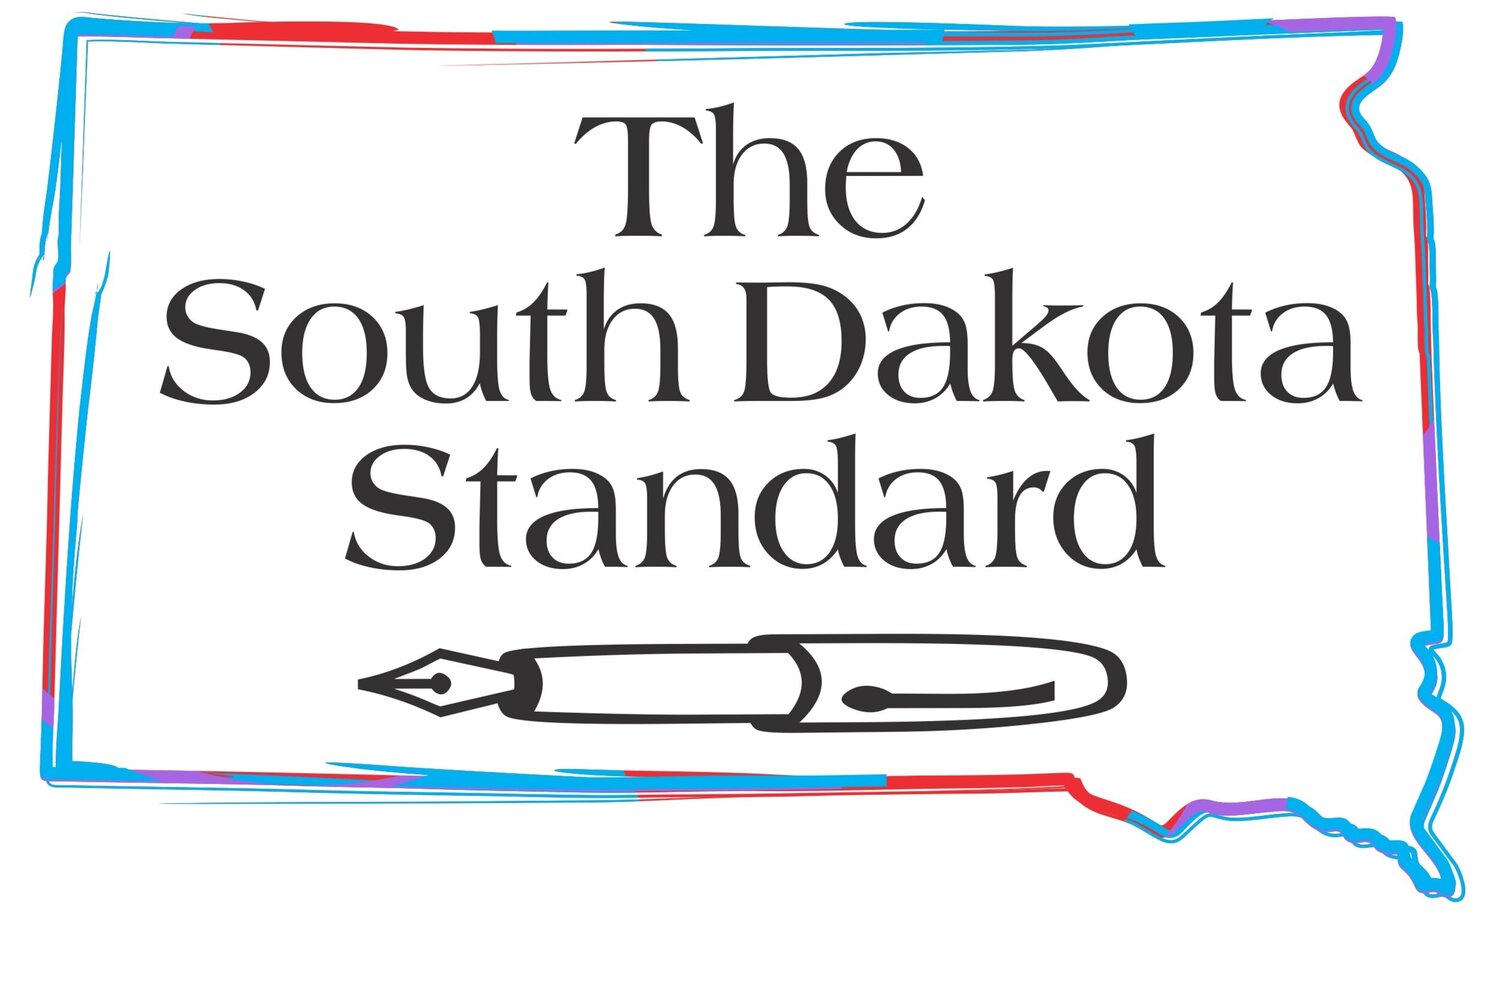 The South Dakota Standard